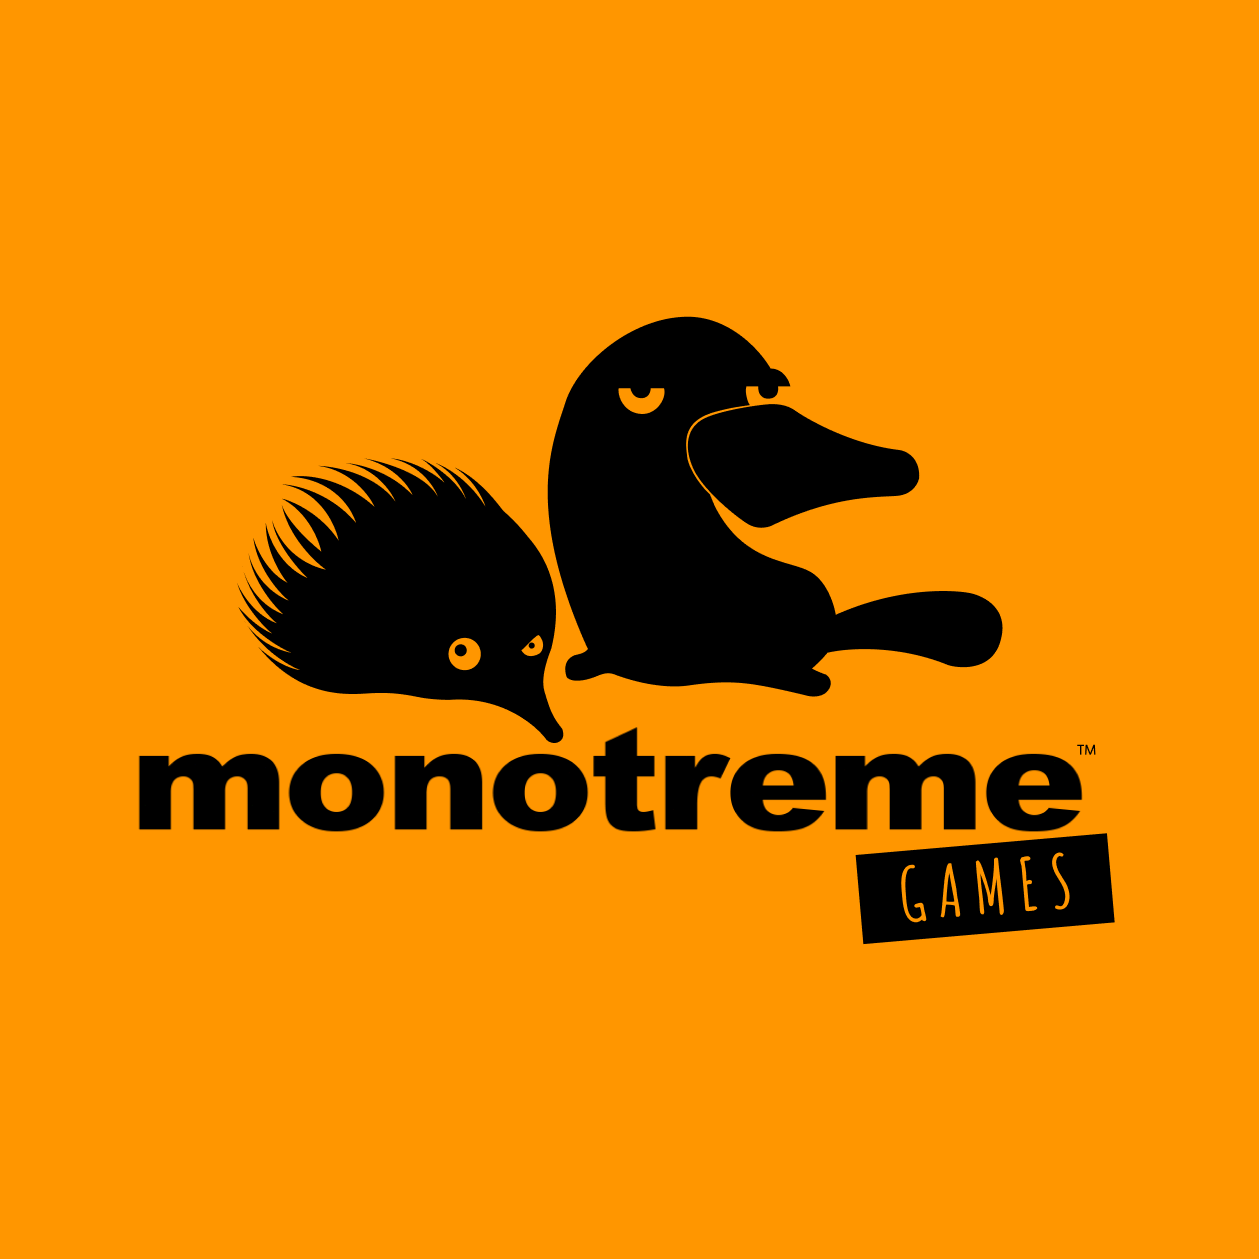 Monotreme Games Studio Games - Y8.com